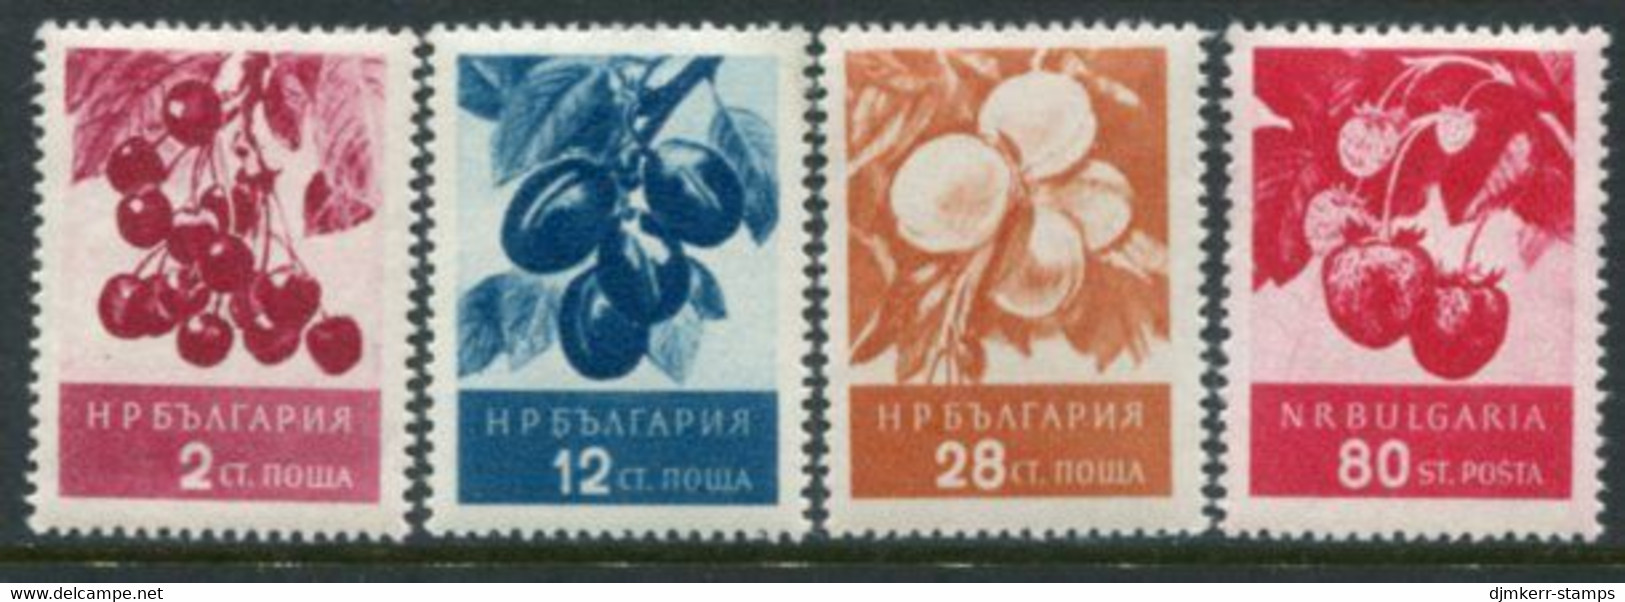 BULGARIA 1956 Fruits II MNH / **.  Michel 990-93 - Nuevos